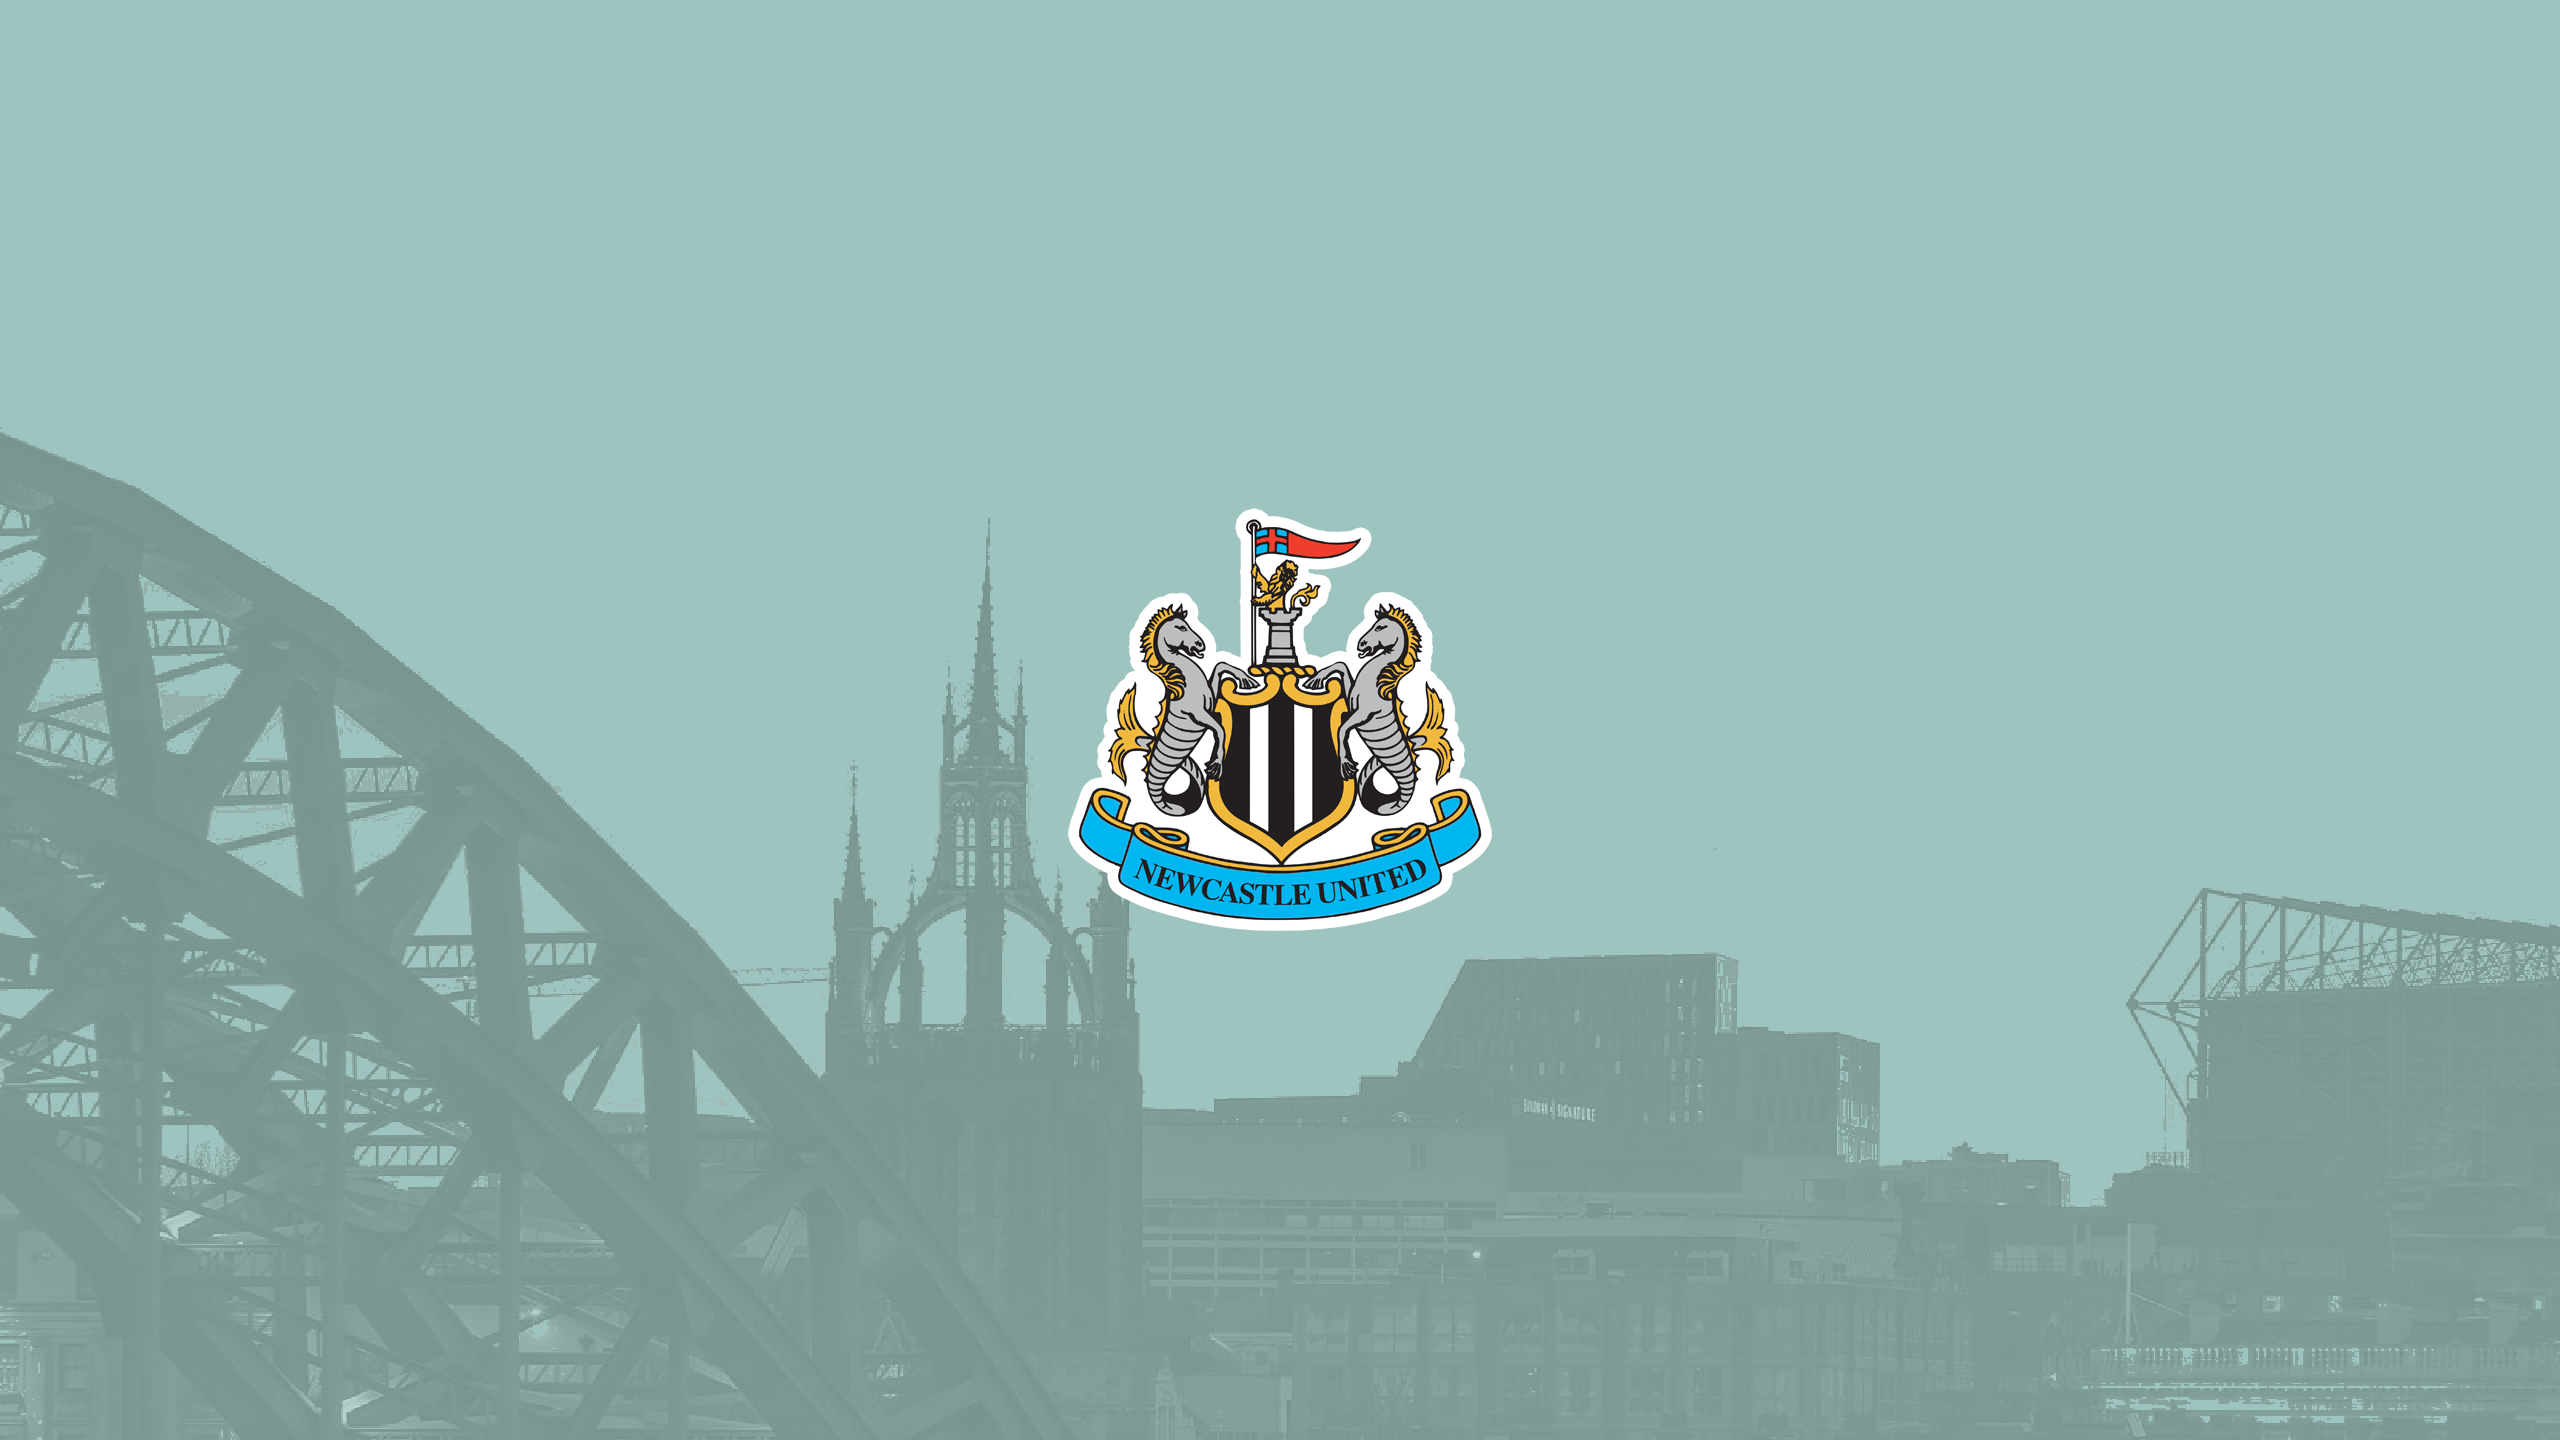 Newcastle United F.C. - English Premier League - Soccer - Square Bettor